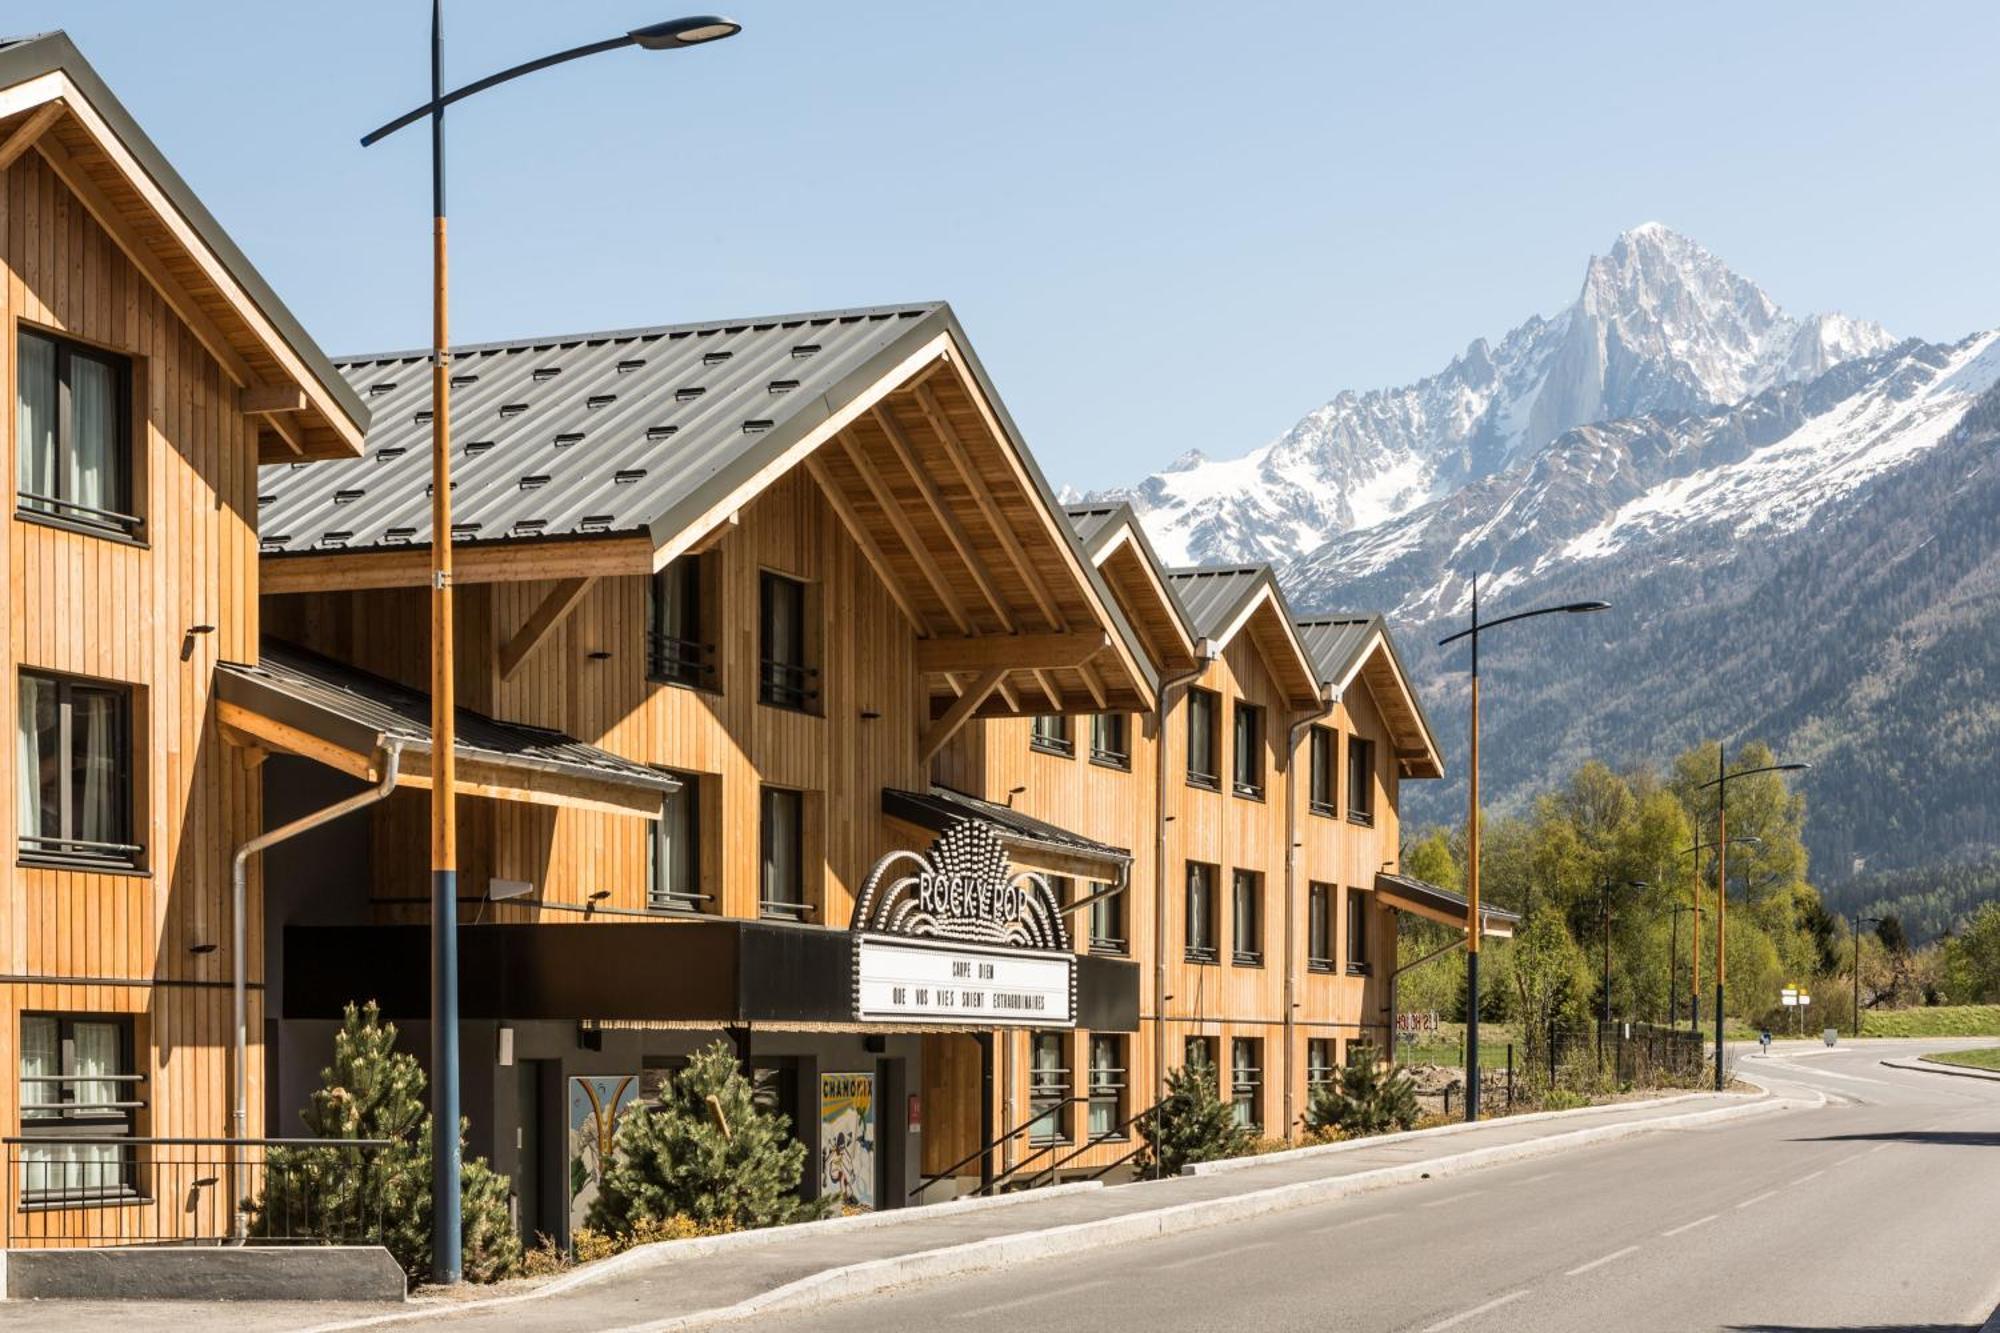 Rockypop Chamonix - Les Houches 호텔 외부 사진